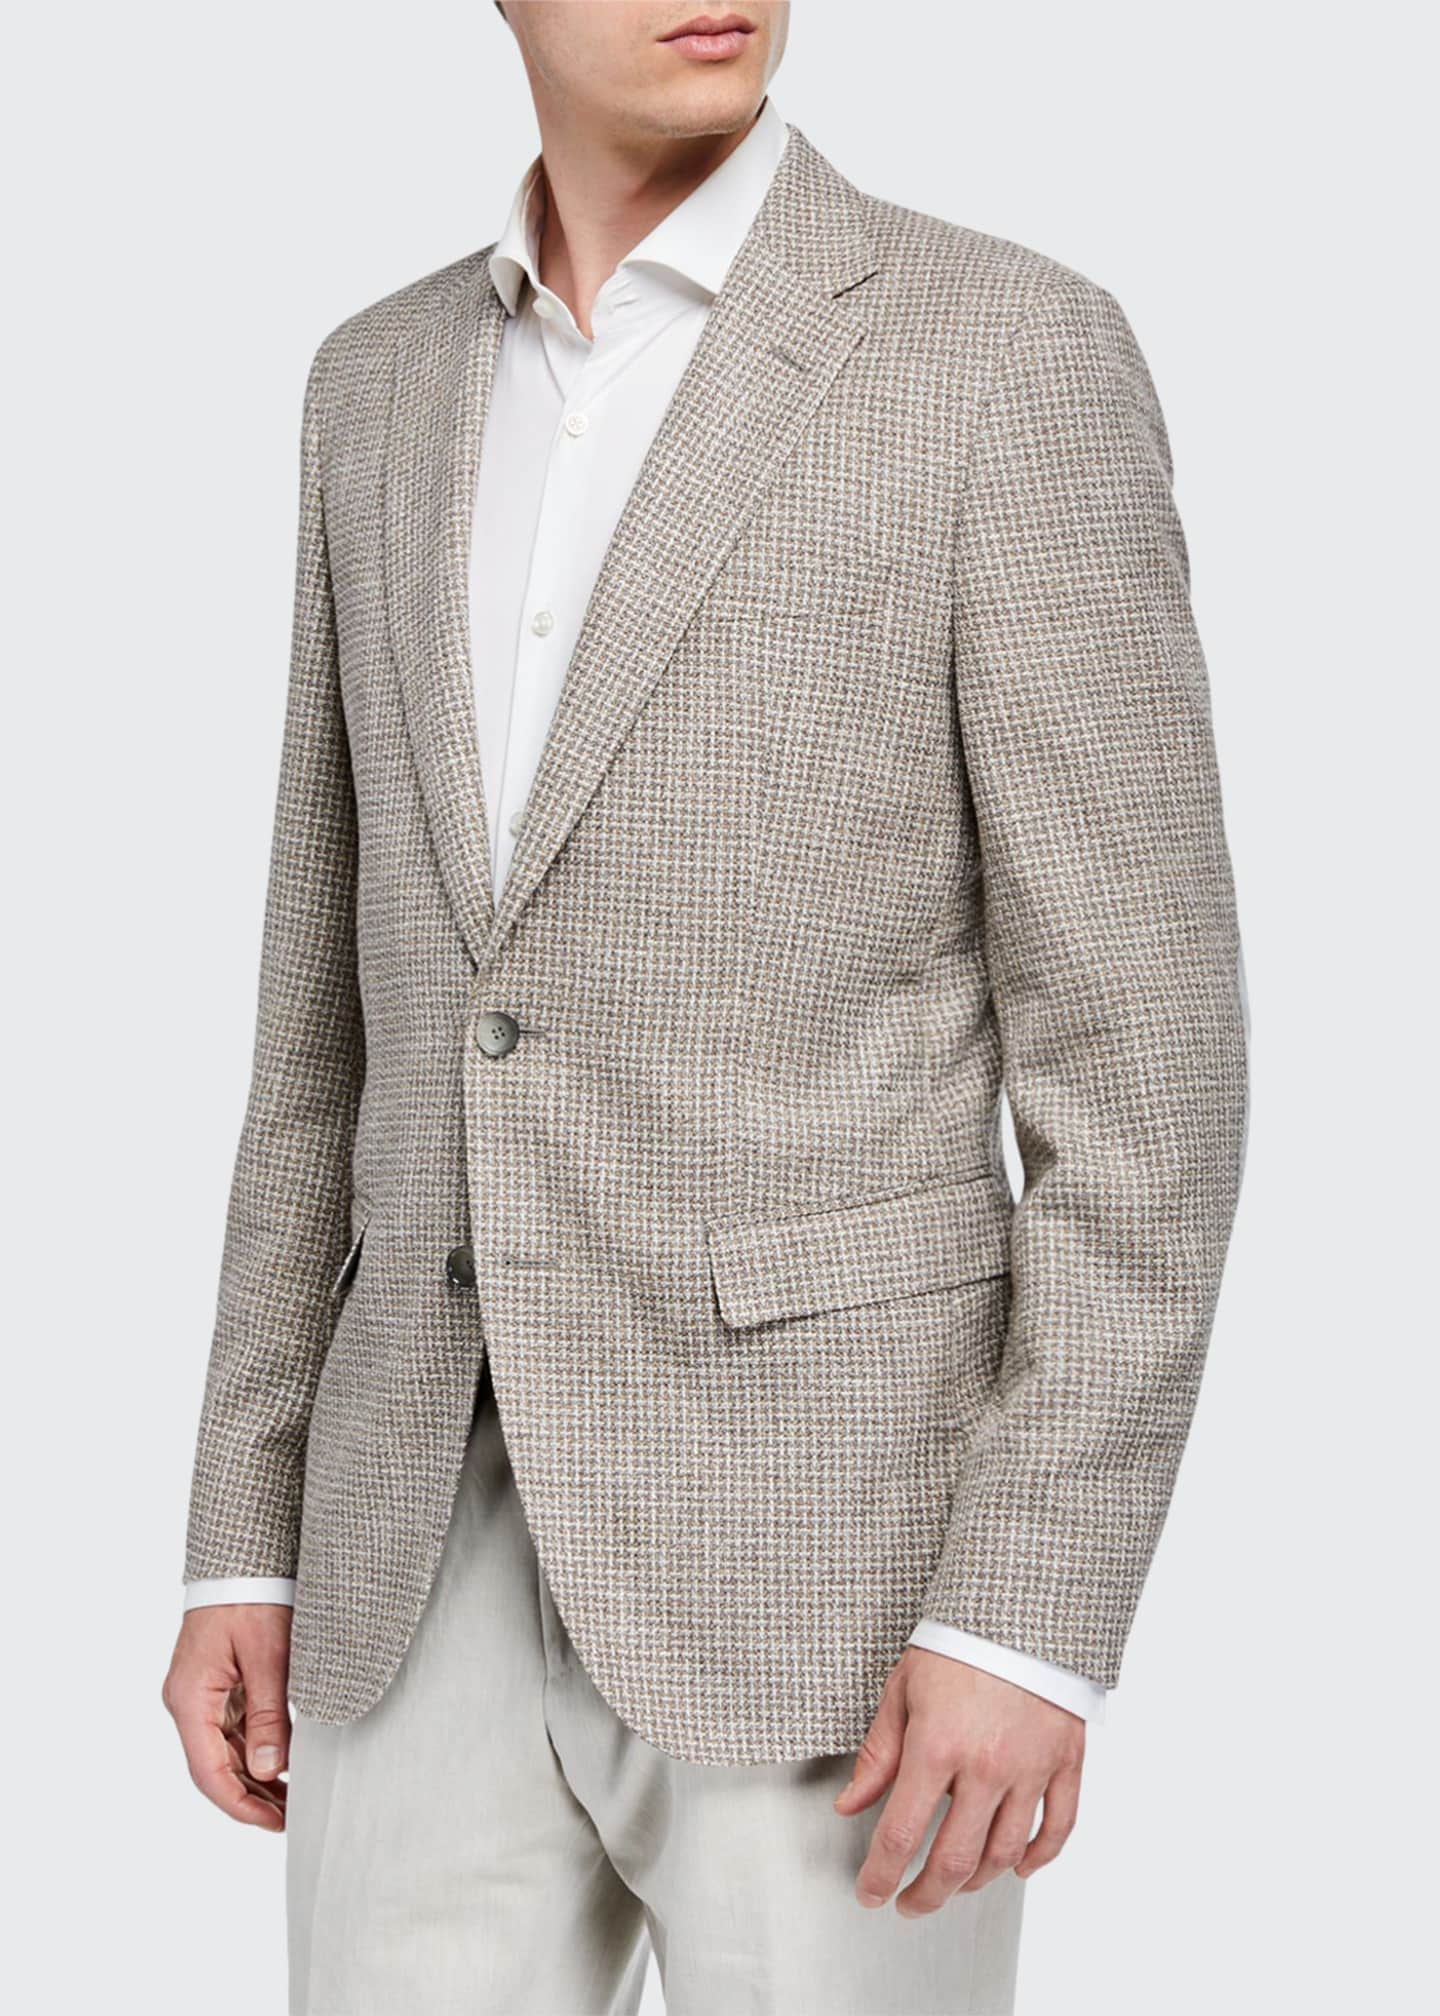 BOSS Men's Cotton-Blend Sport Coat w/ Elbow Patches, Tan - Bergdorf Goodman